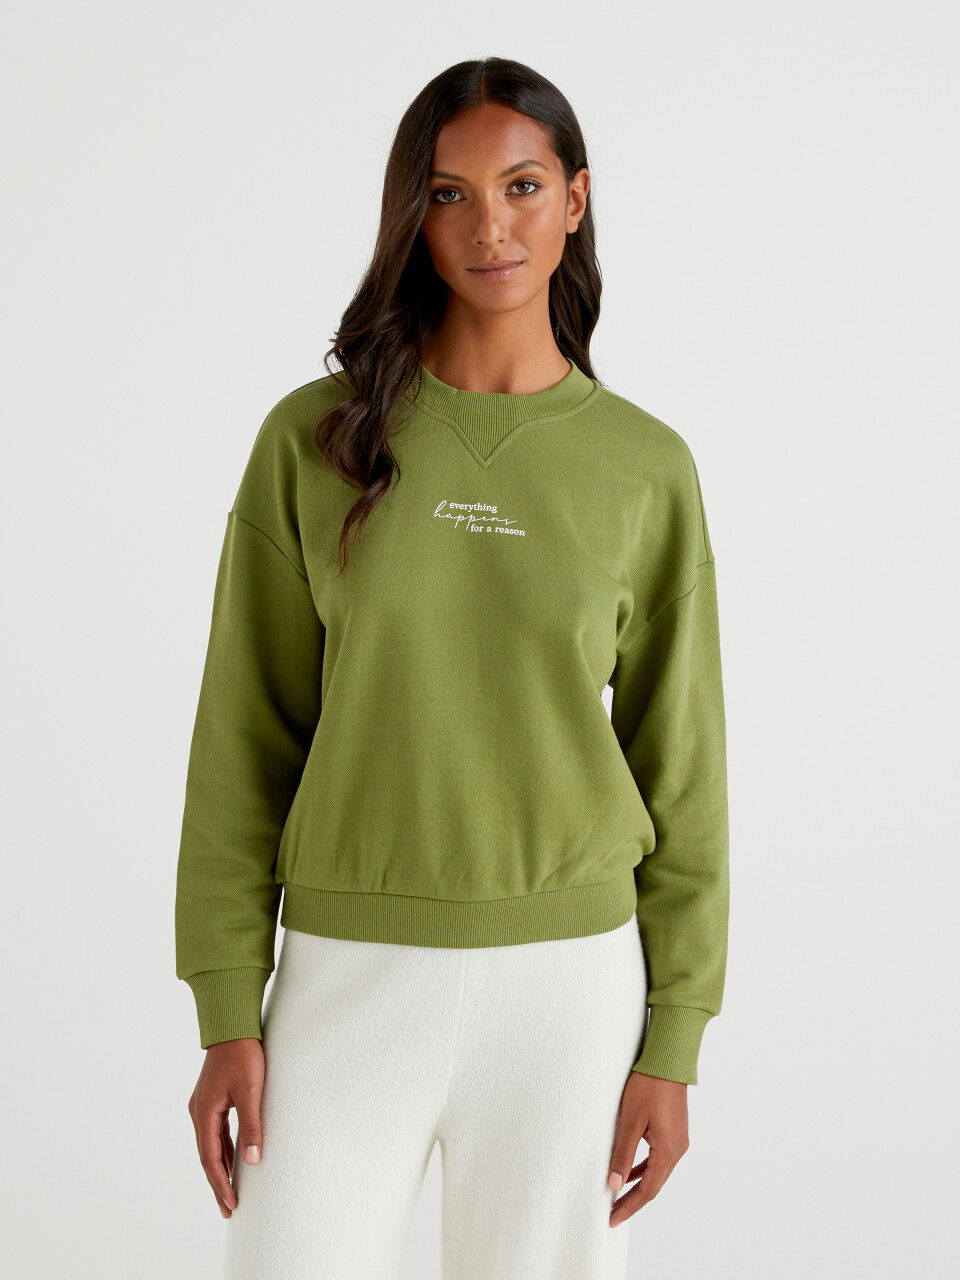 discount 73% Brown L SKFK sweatshirt Skunkfunk WOMEN FASHION Jumpers & Sweatshirts Hoodless 